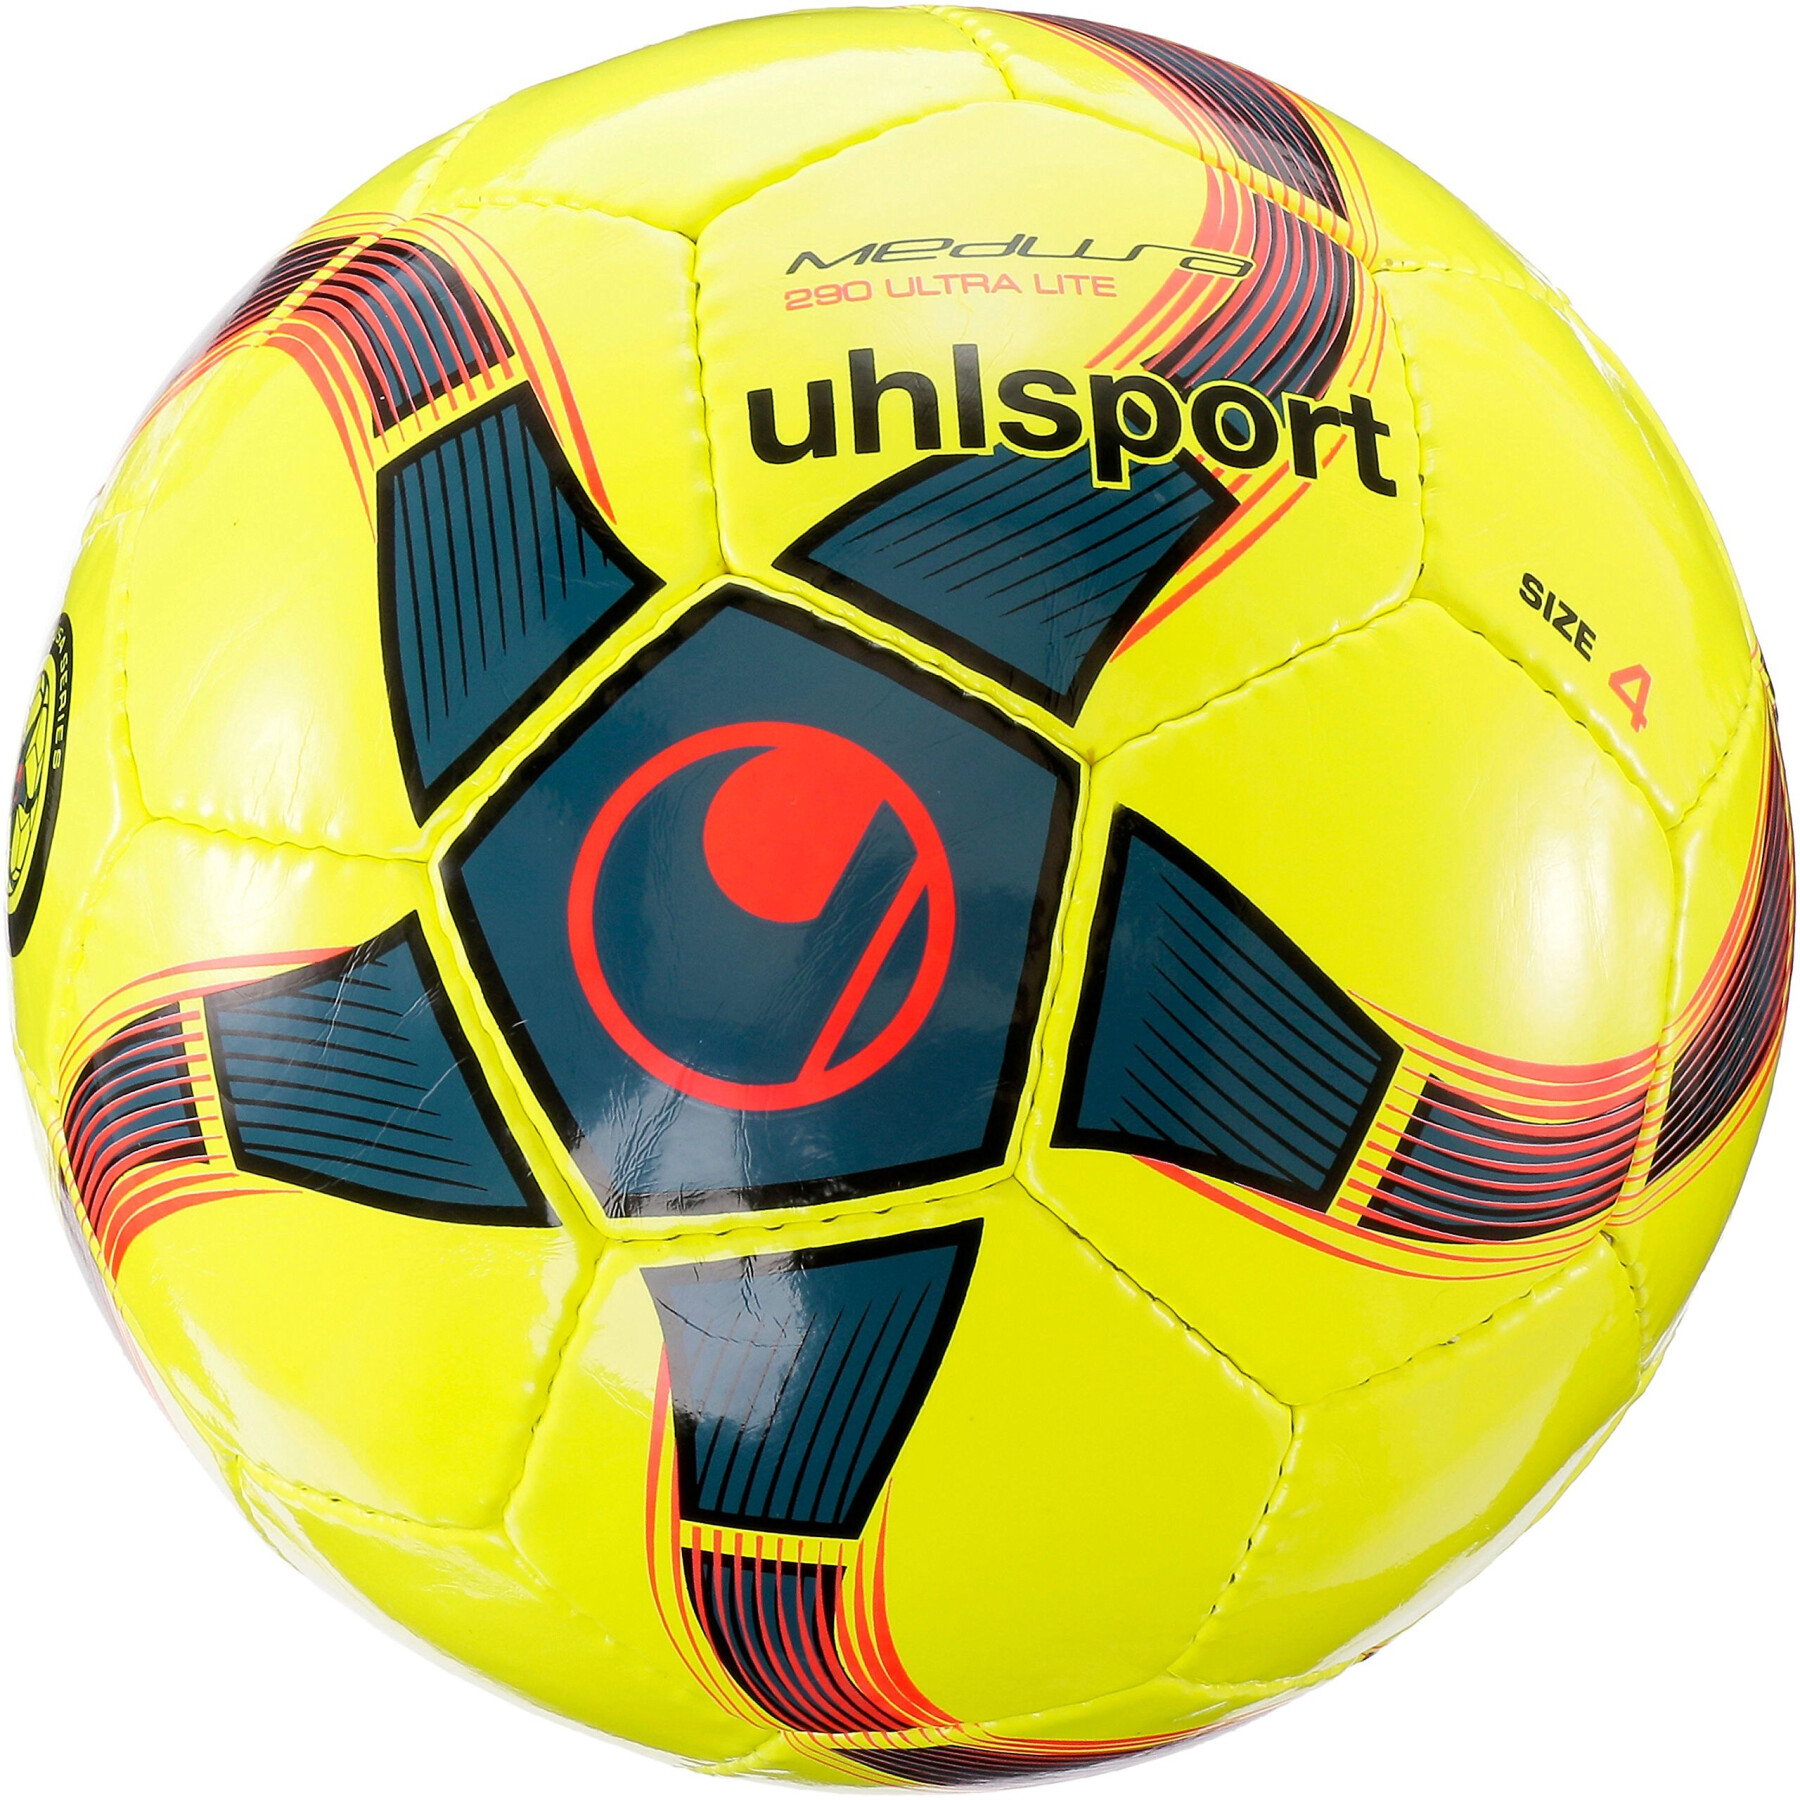 Ballong Uhlsport Futsal Anteo 290 Ultra Lite